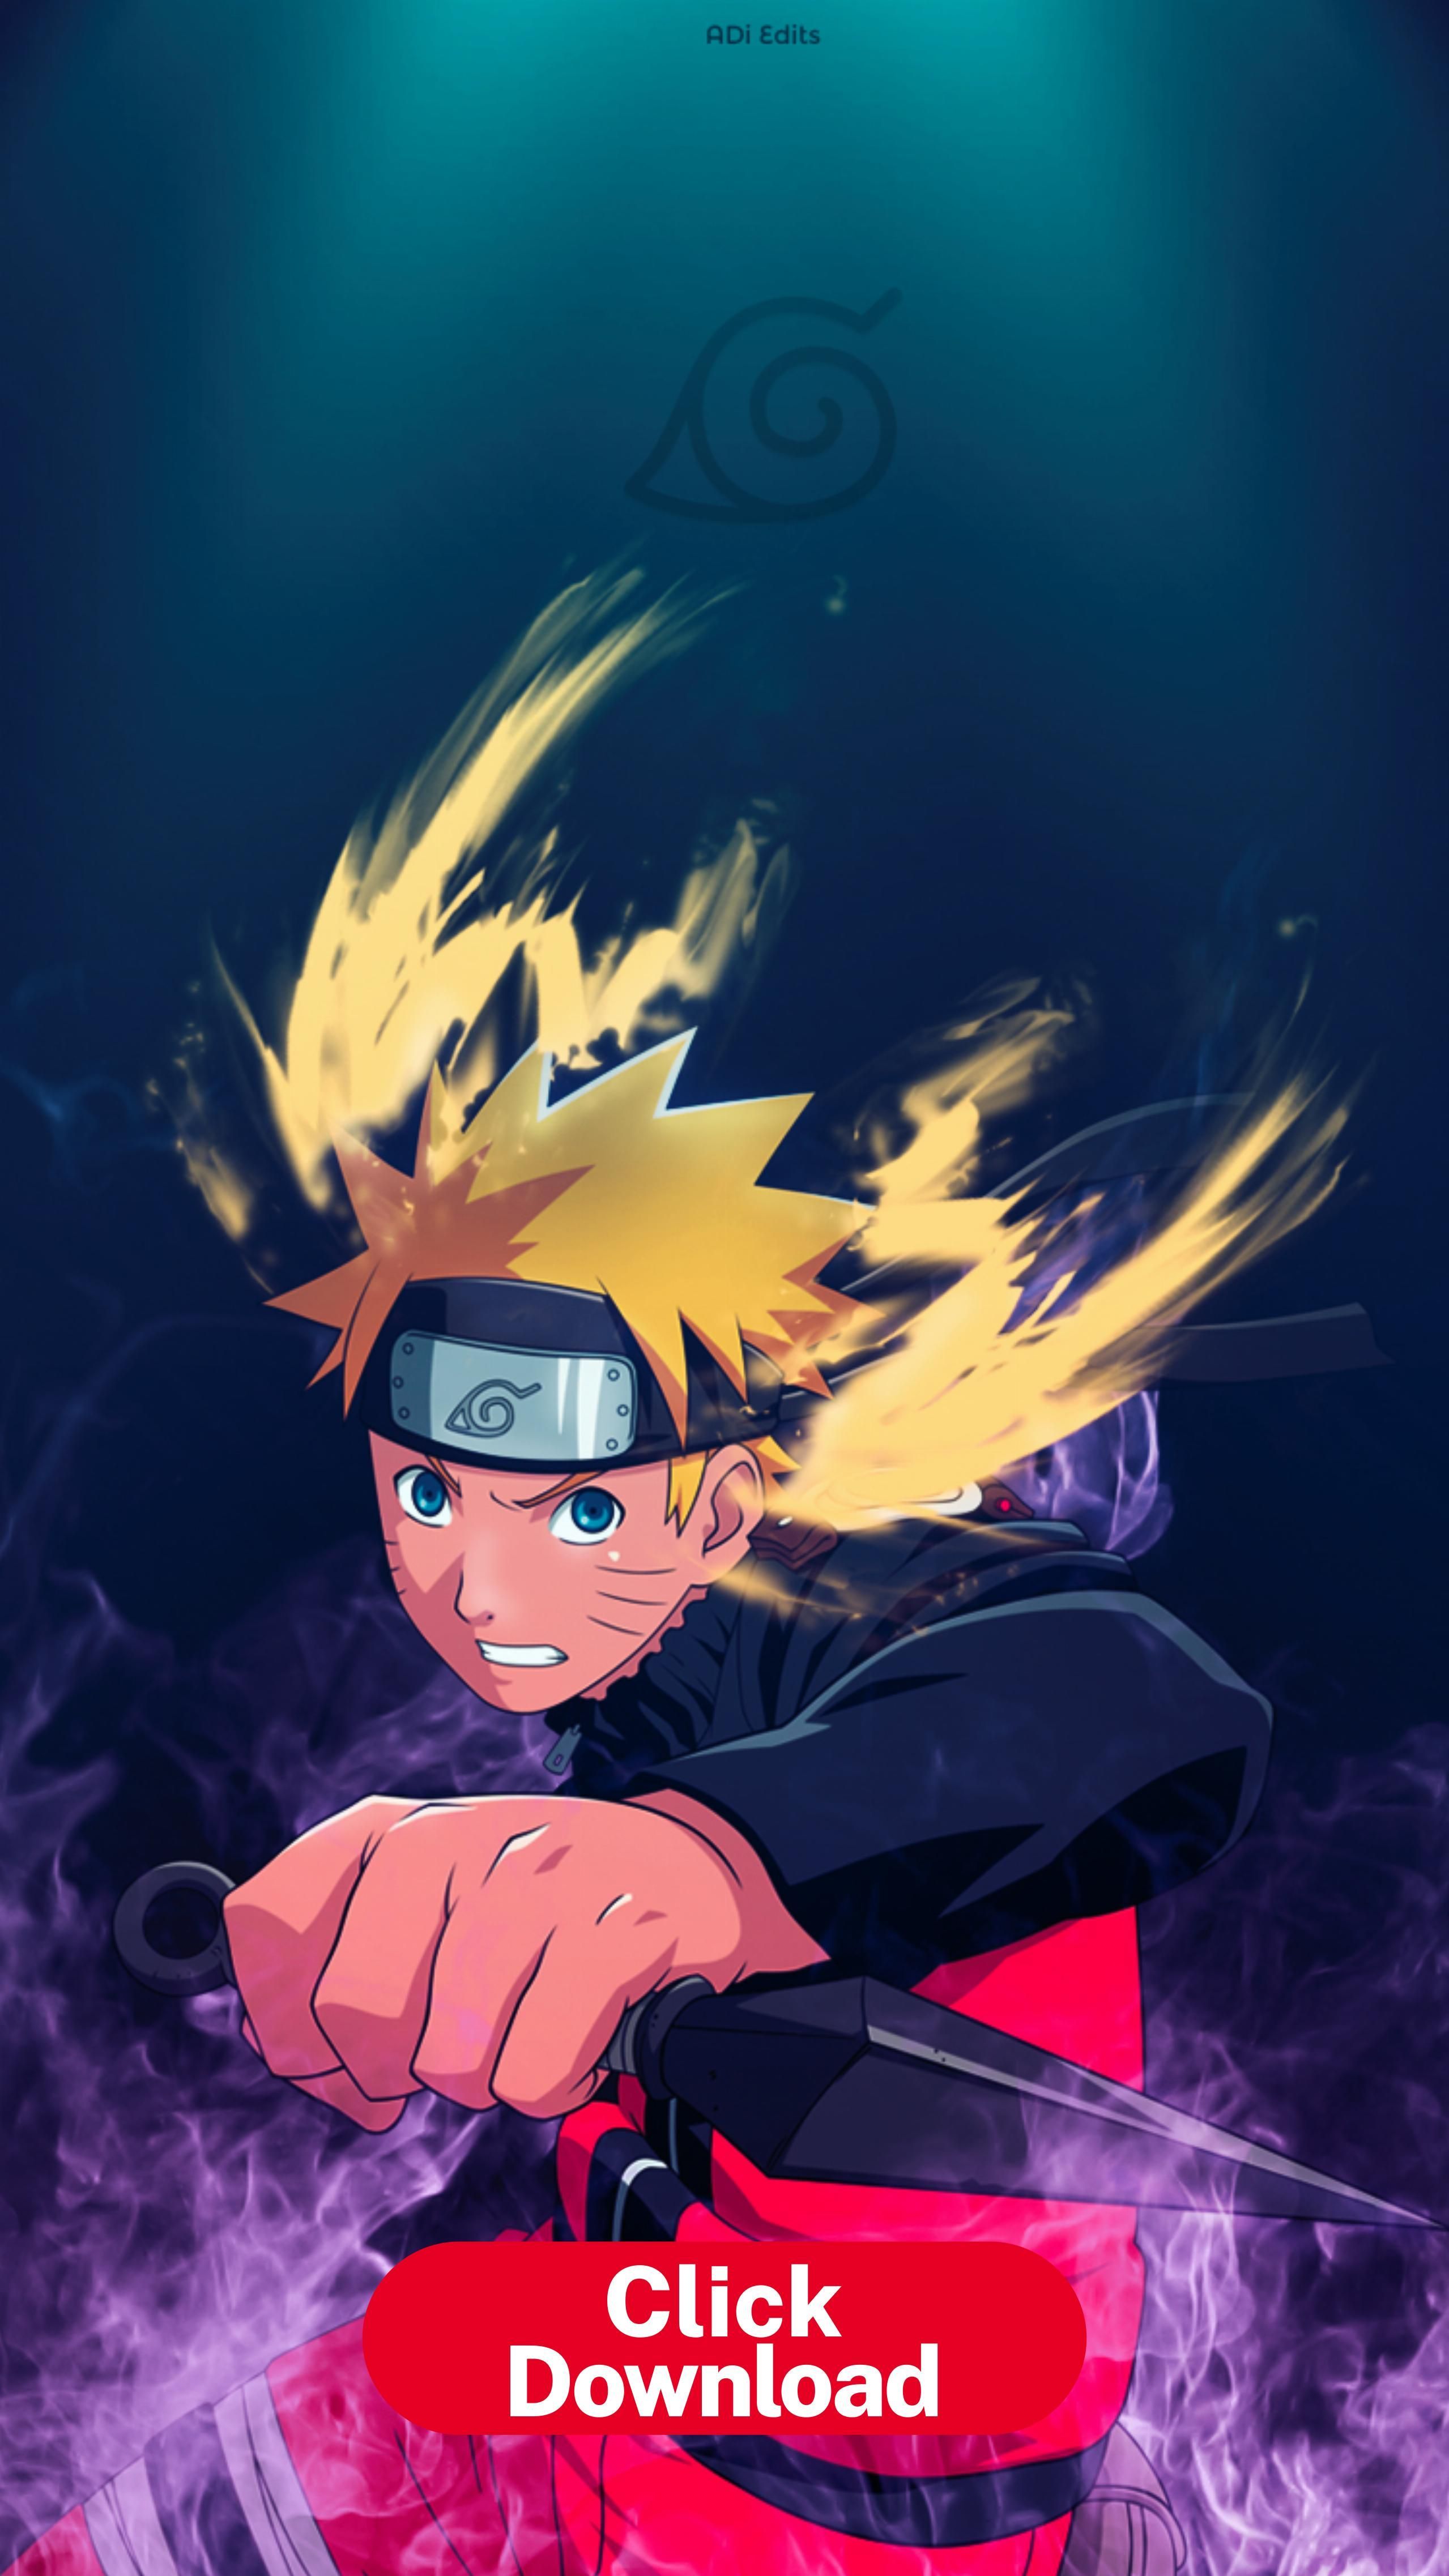 Naruto Mobile Wallpaper By Adi 149. Anime, Naruto Wallpaper, Anime Wallpaper